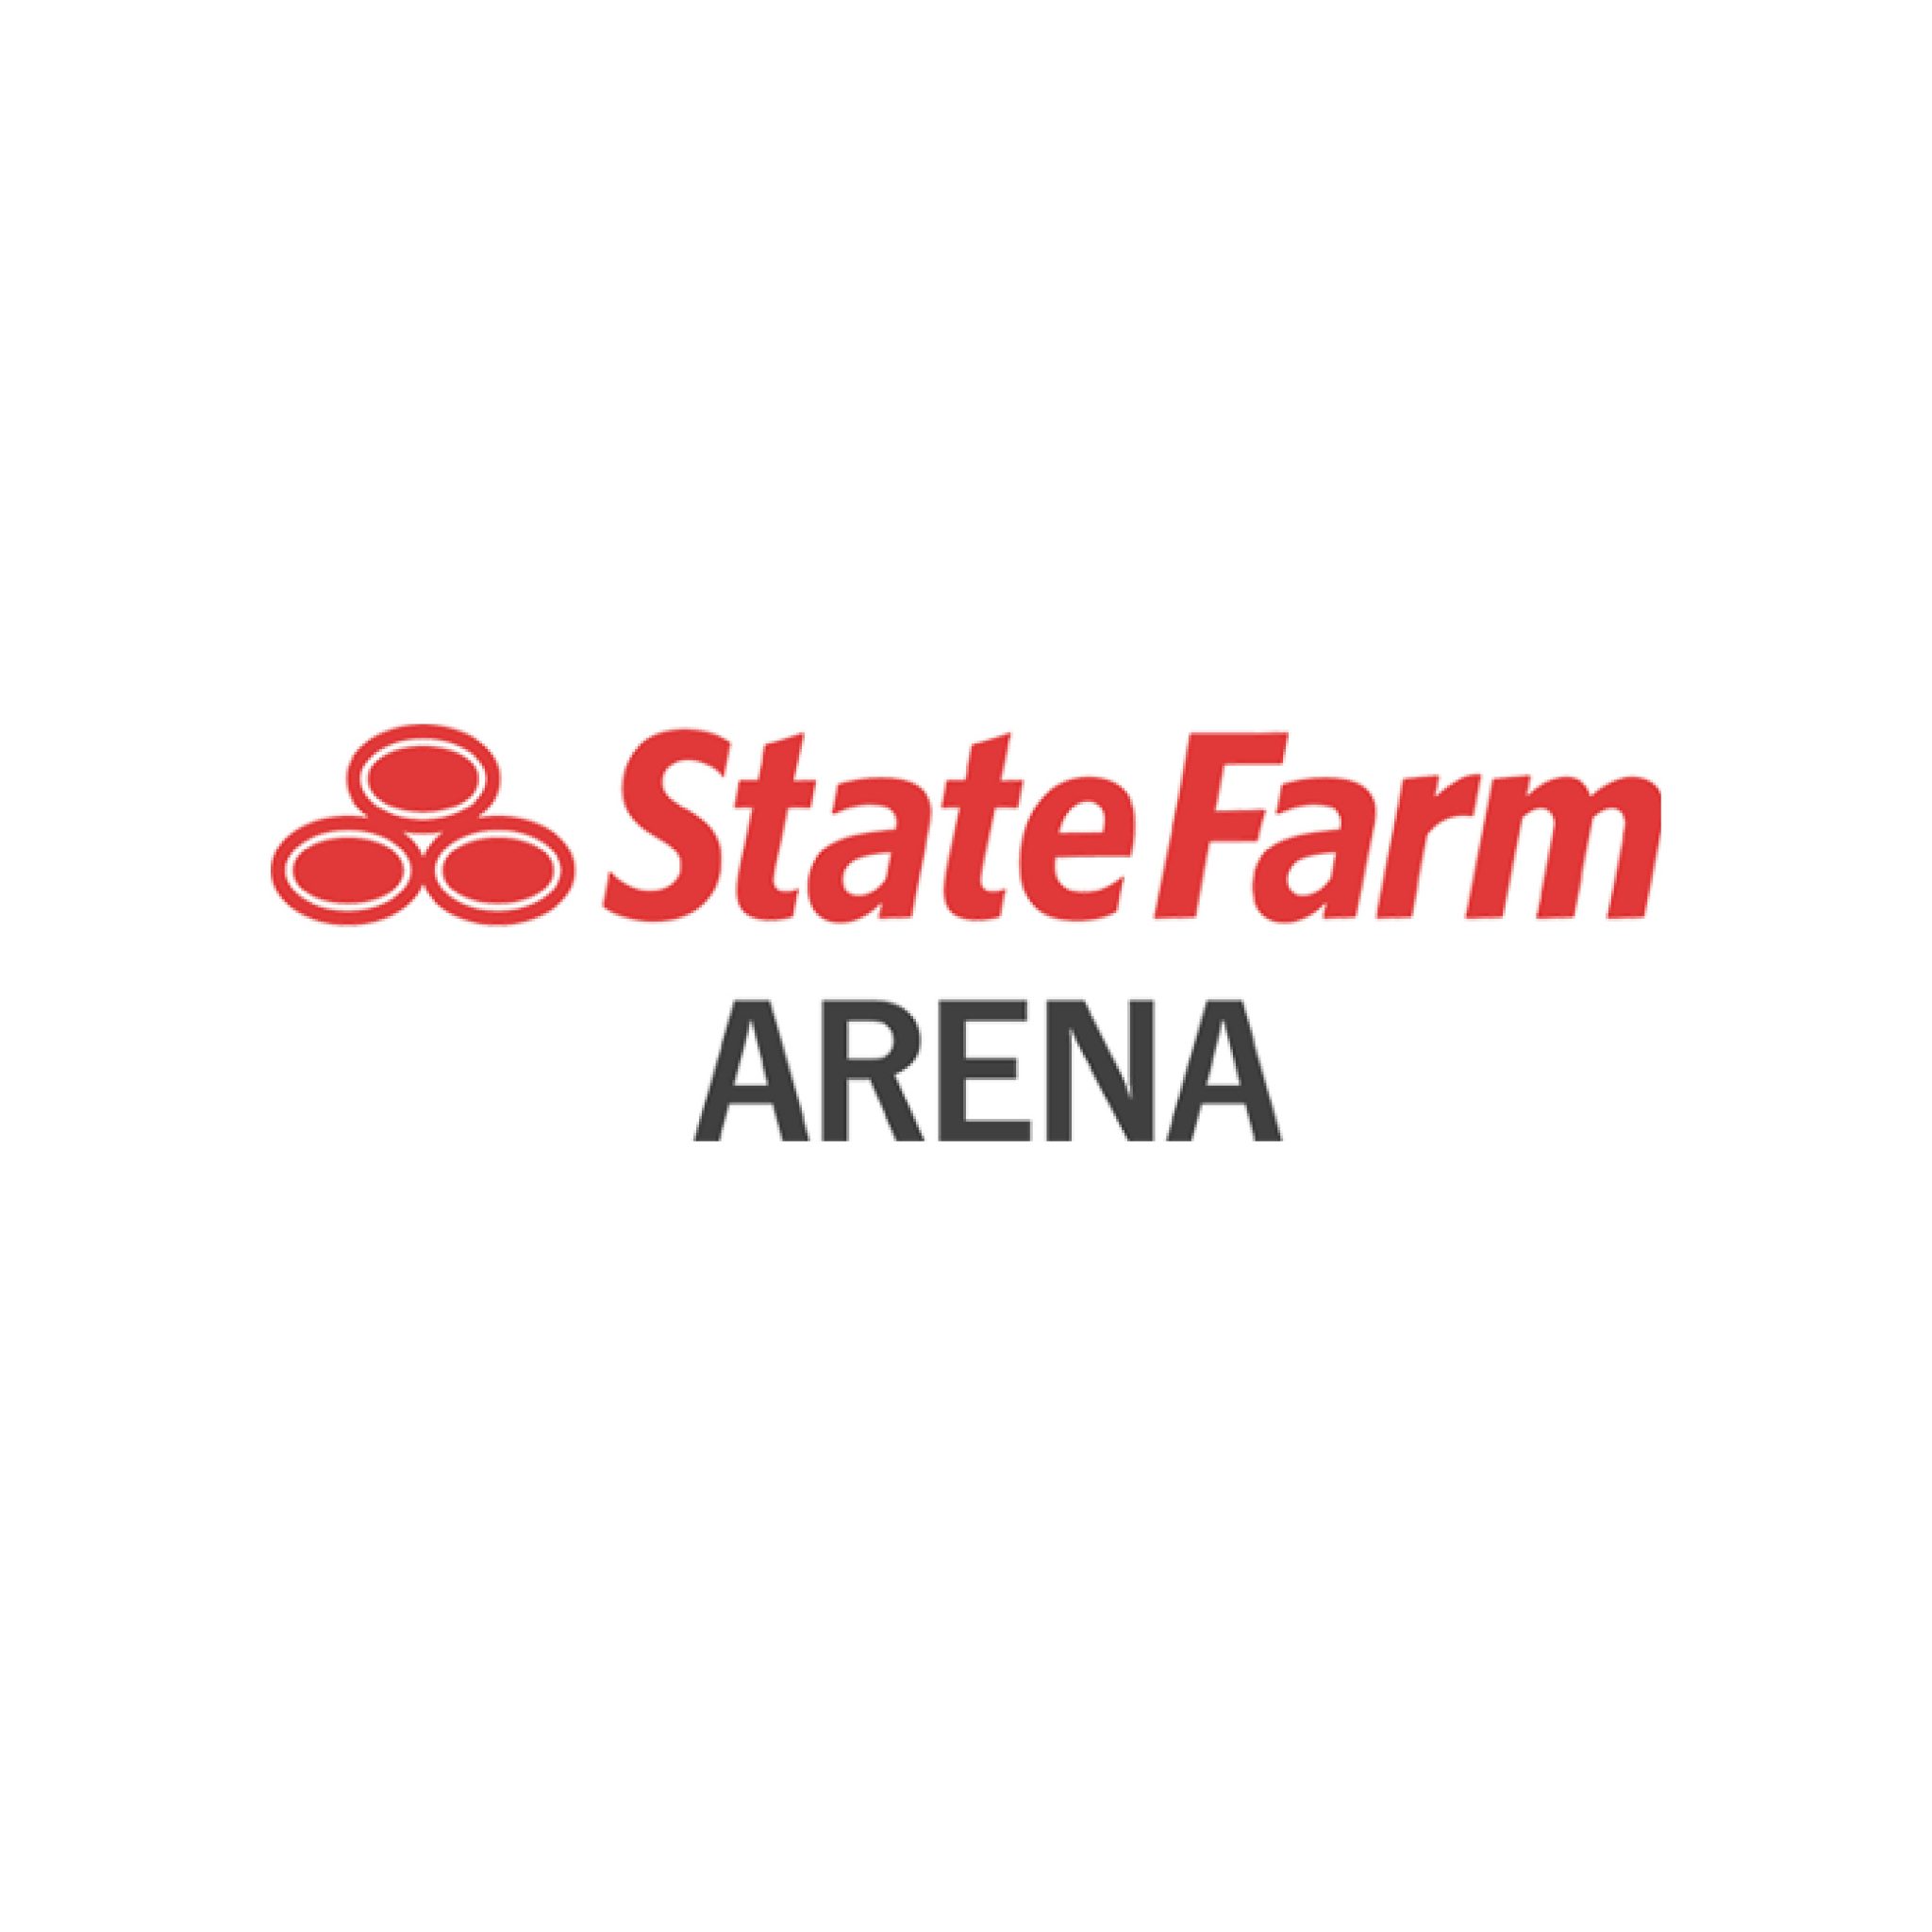 State Farm Arena Renovation - HOK